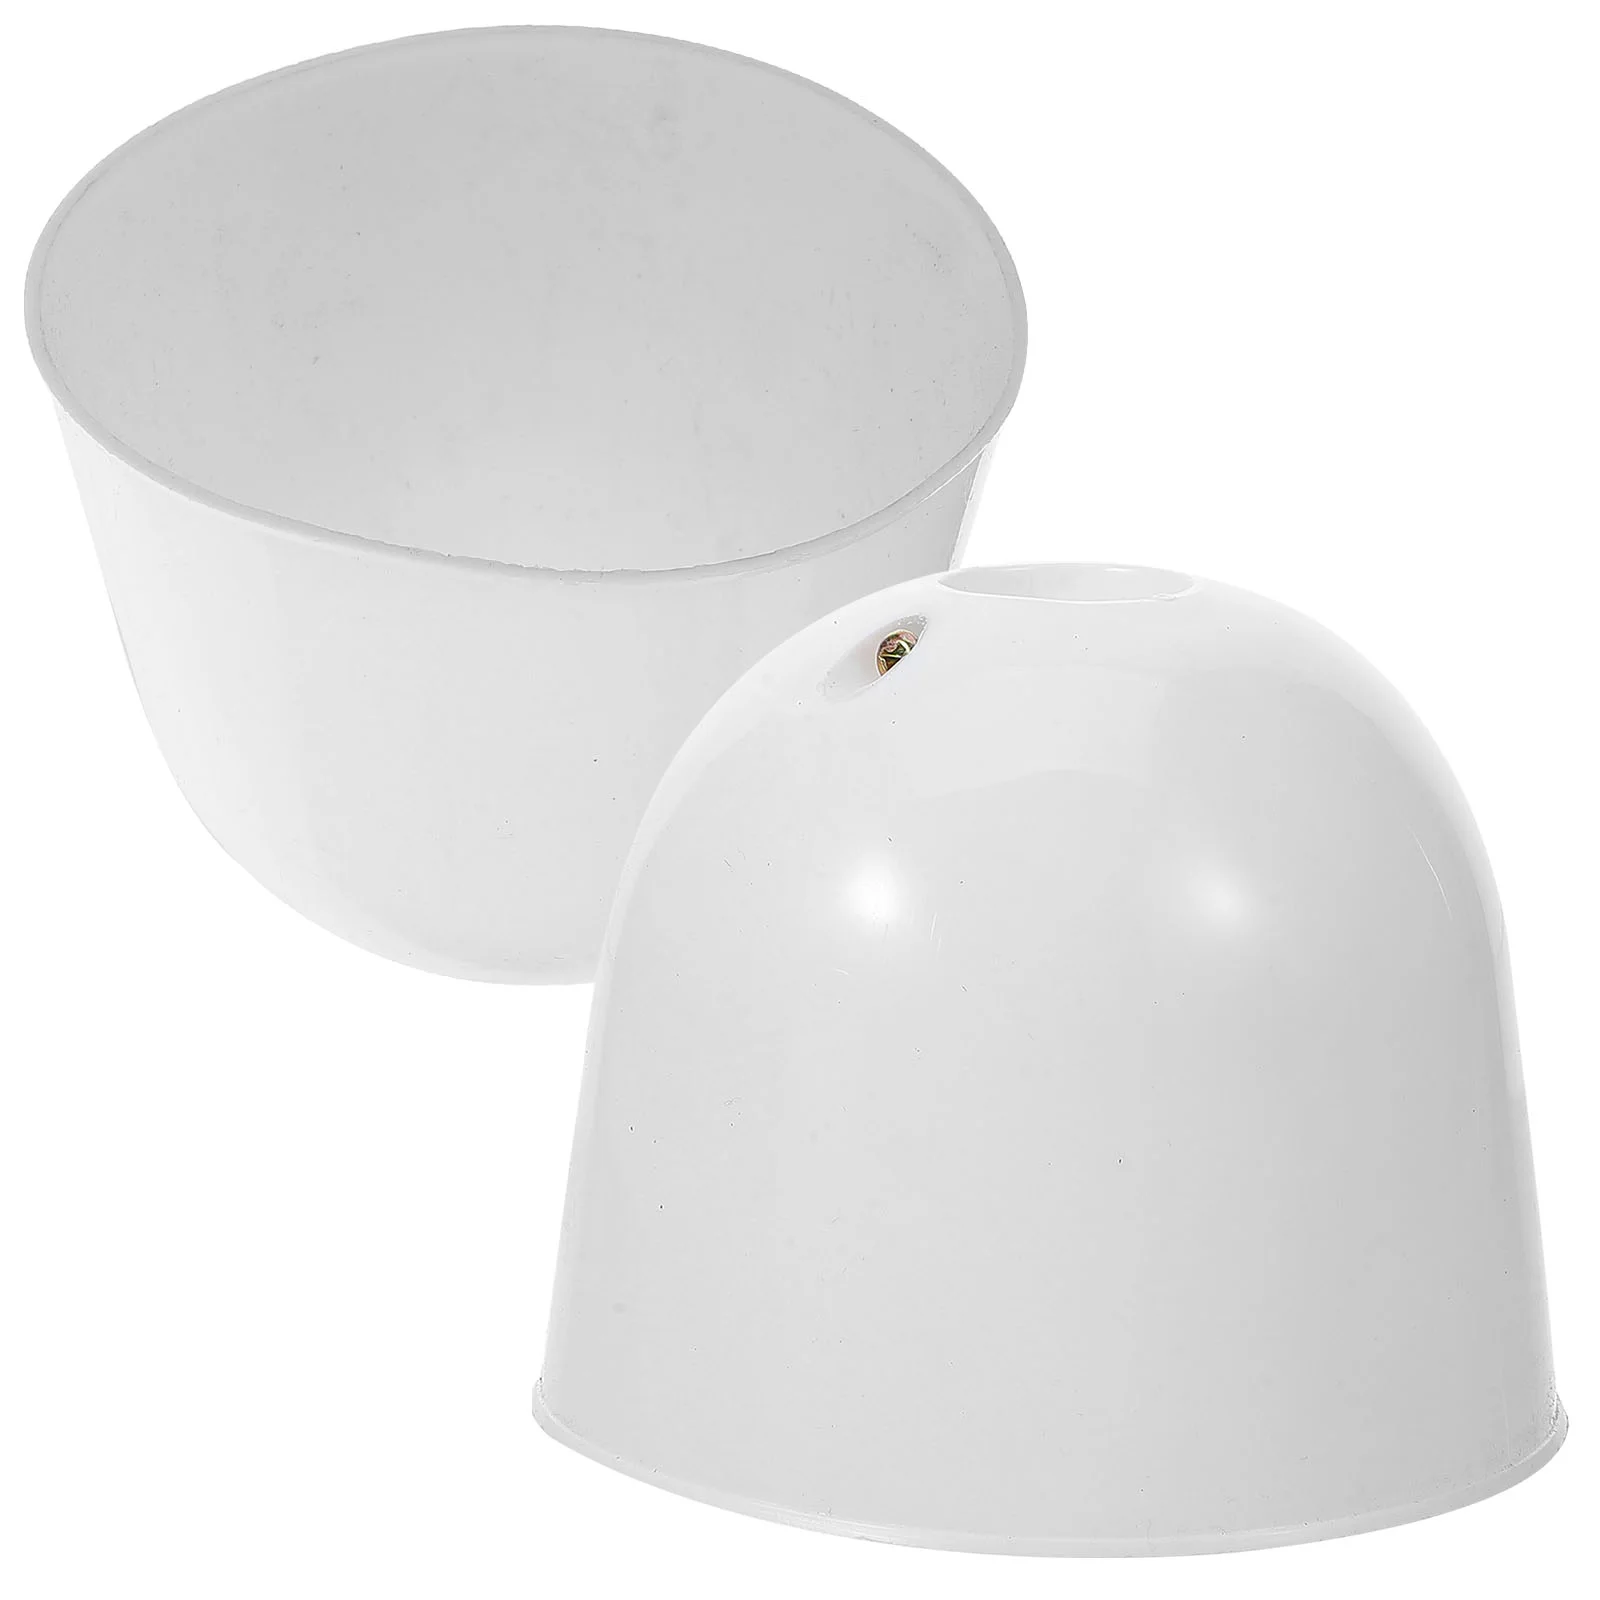 

2 Pcs Ceiling Fan Dust Cover Bottom Canopy Home Decoration White Parts for Fans Accessories Pendant Kit